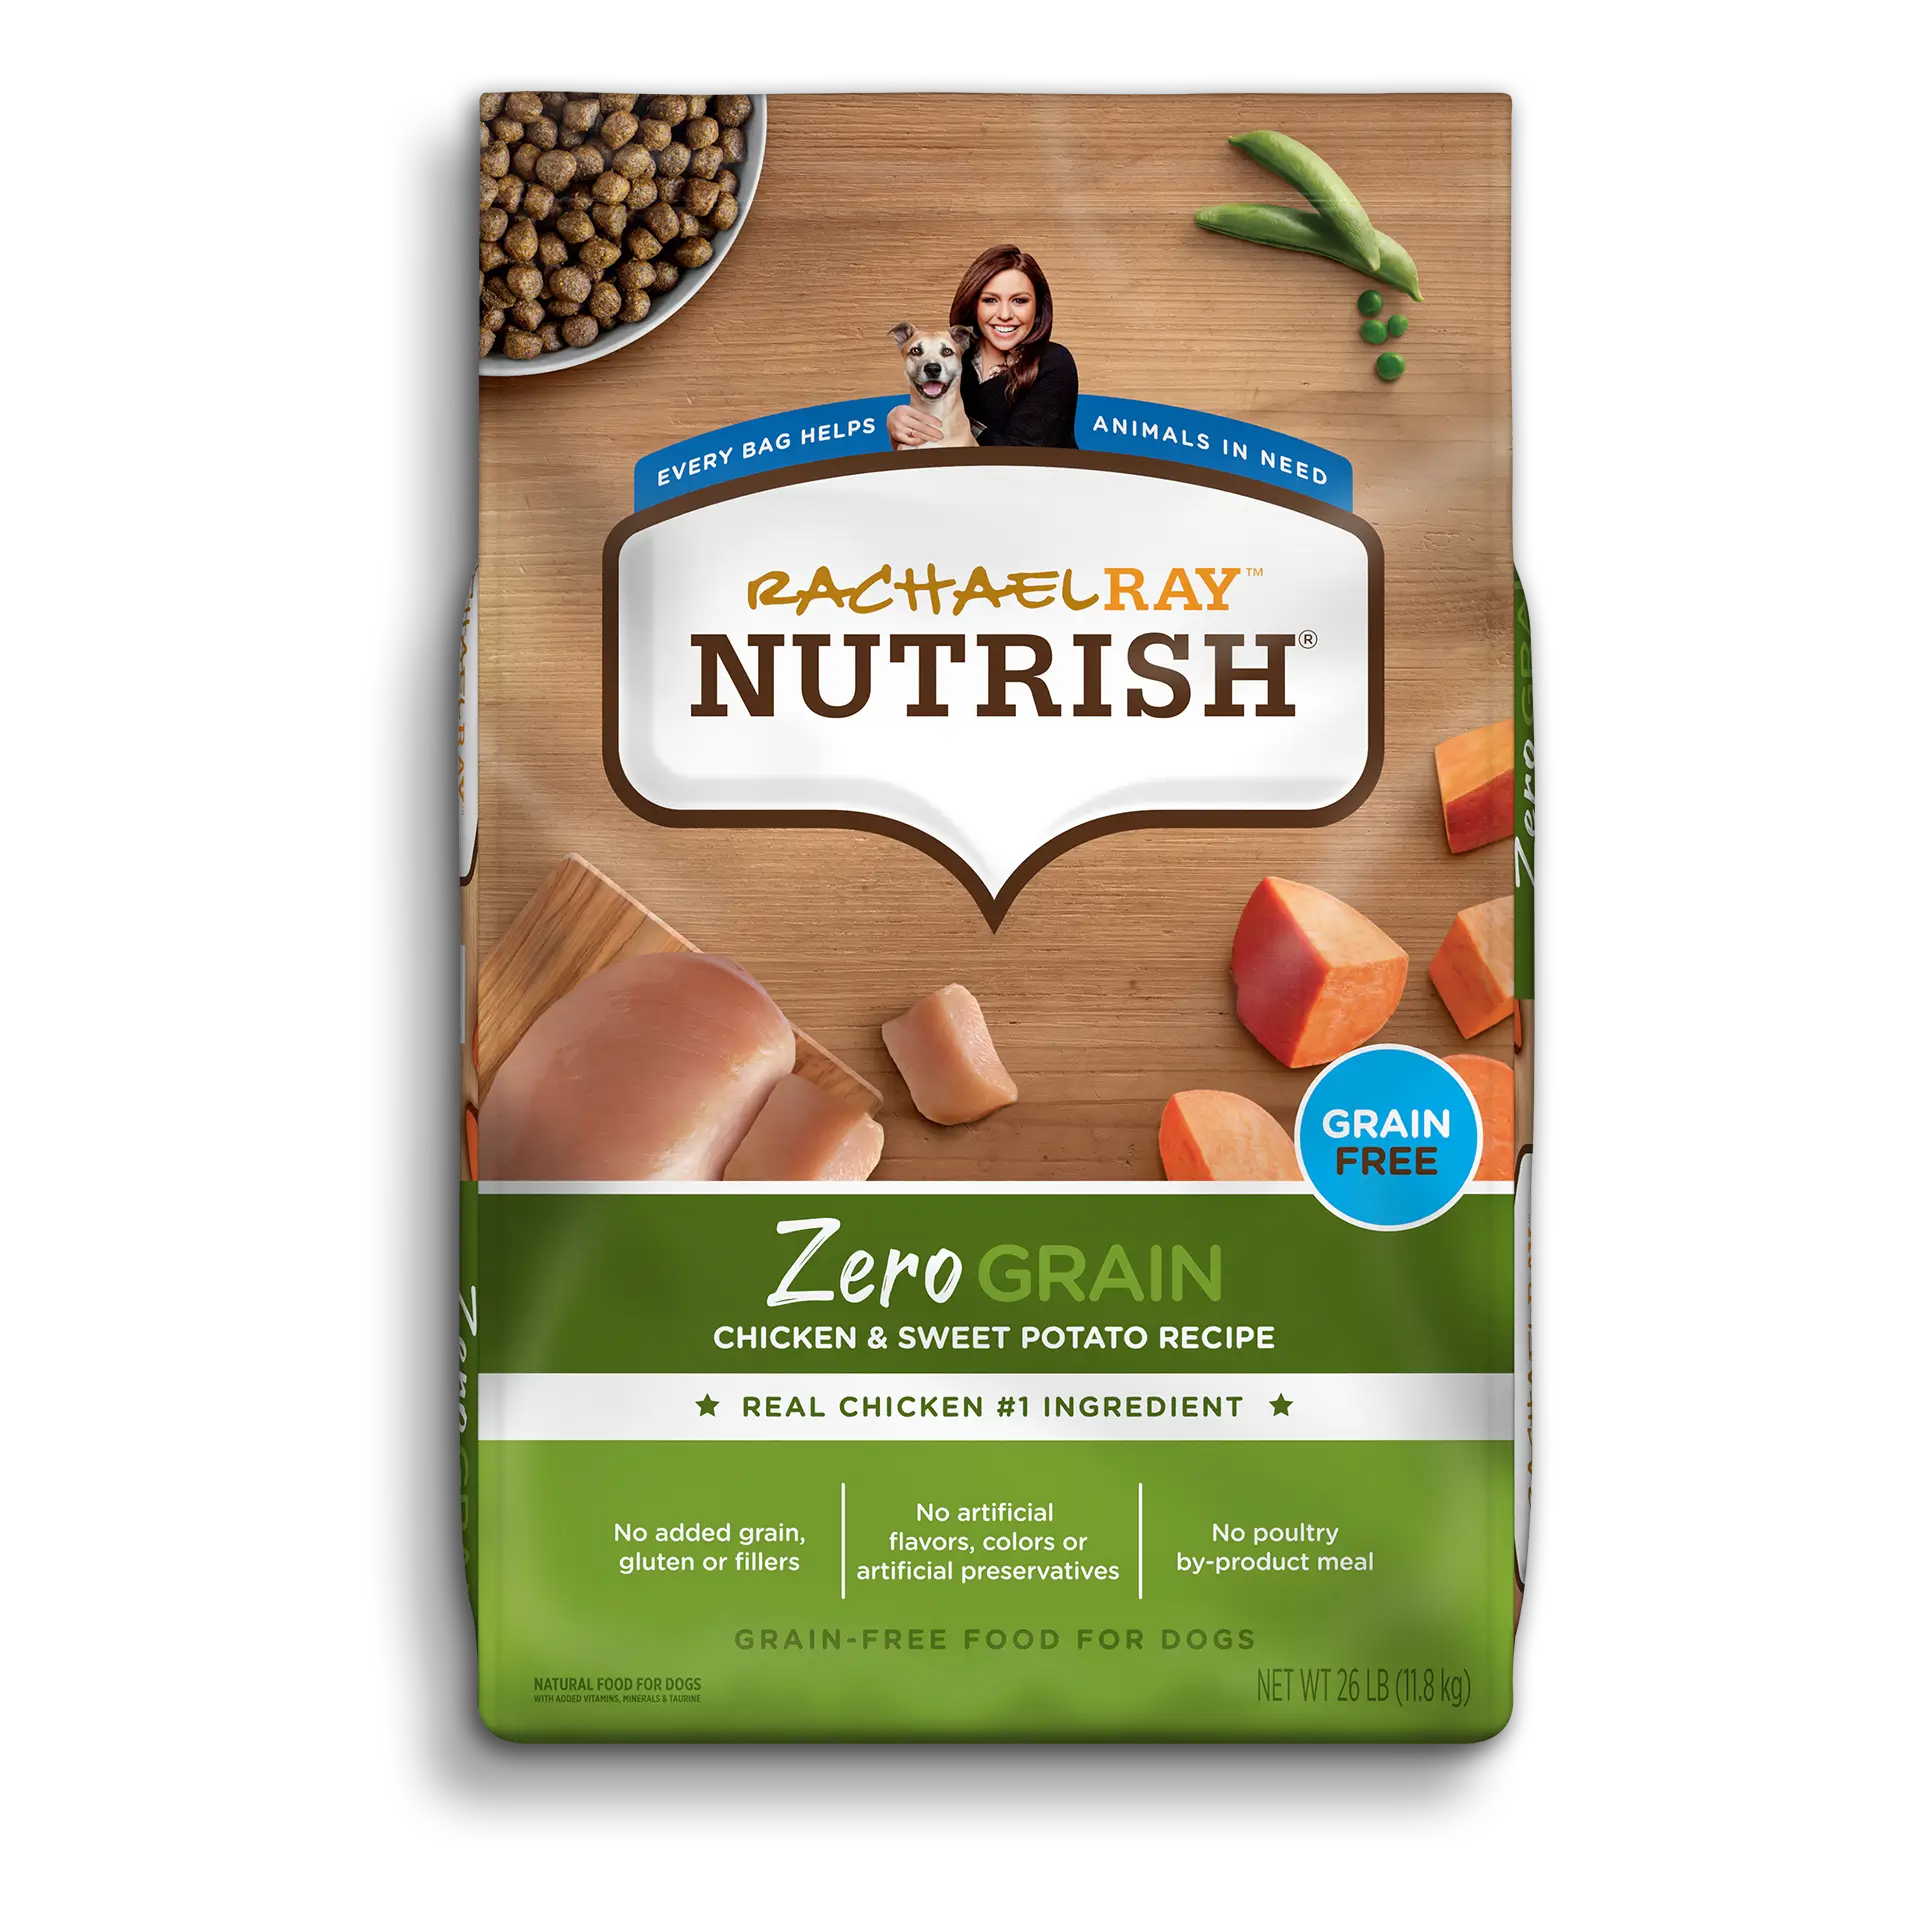 Rachael Ray Nutrish Zero Grain Dog Food Review (Dry)